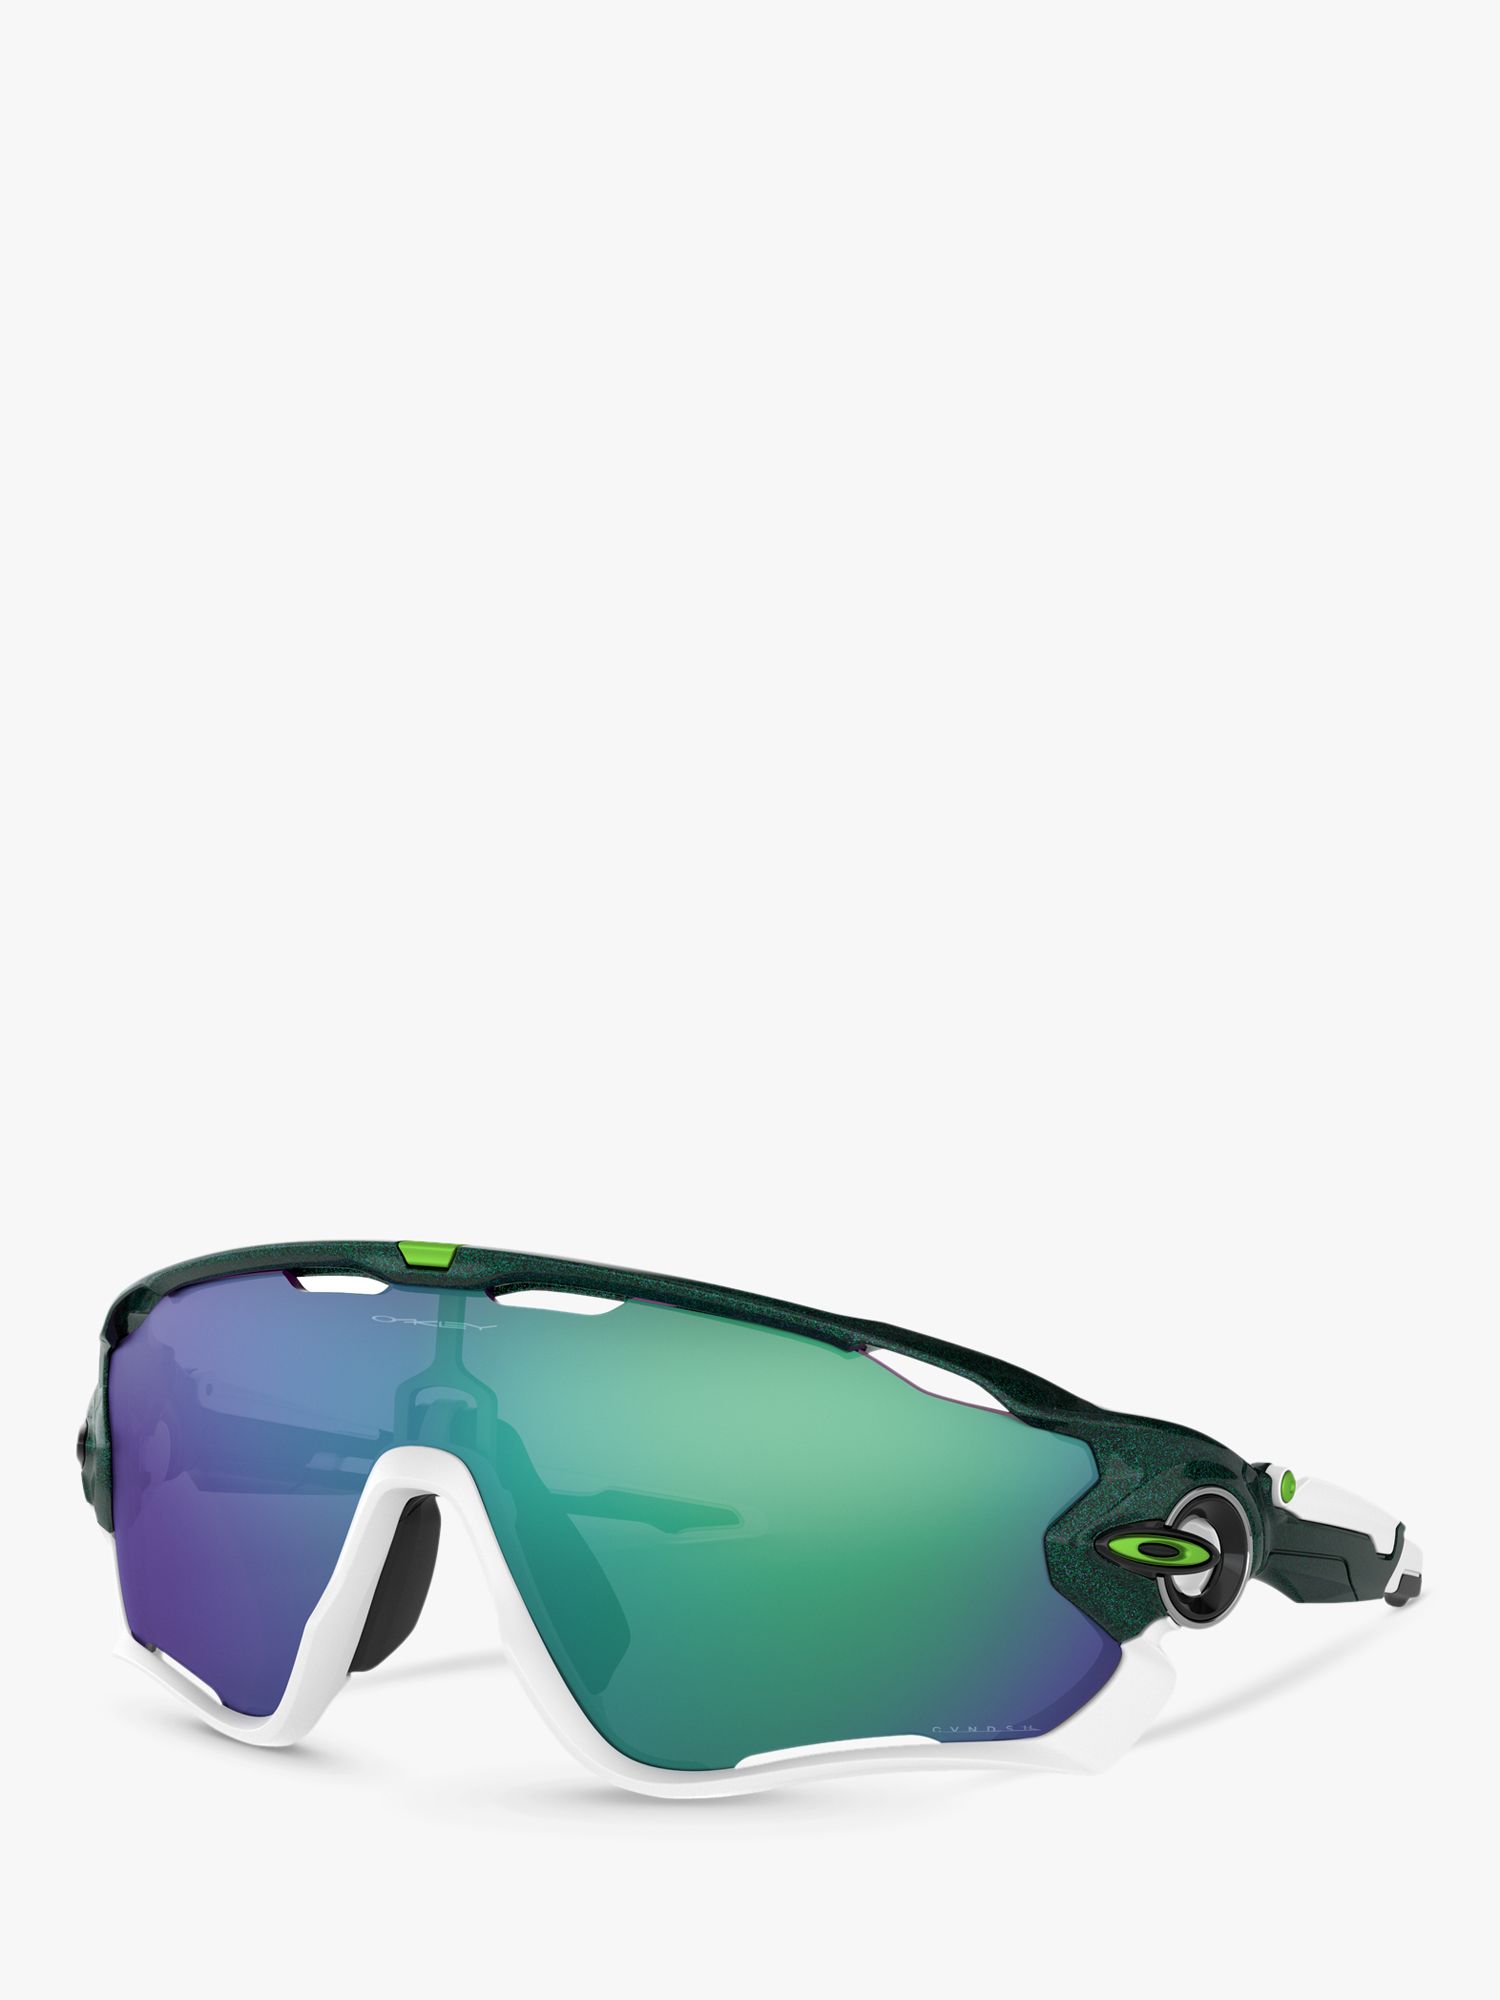 Oakley OO9290 Men's Jawbreaker Rectangular Sunglasses, Green/Mirror Green